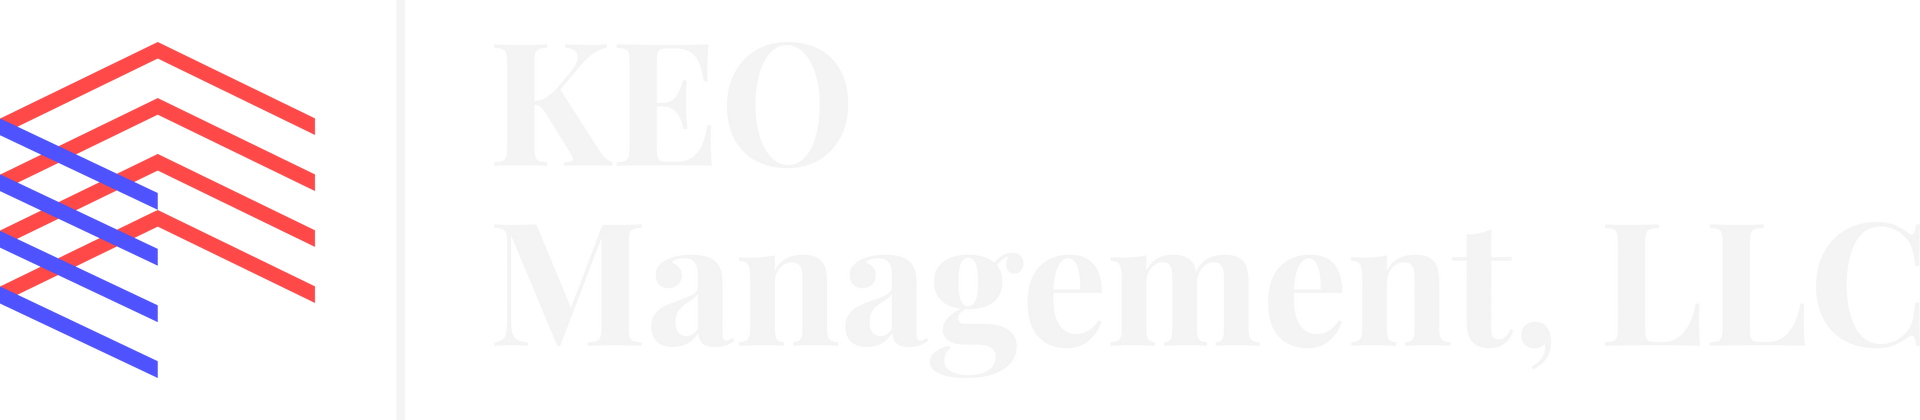 KEO Management LLC logo